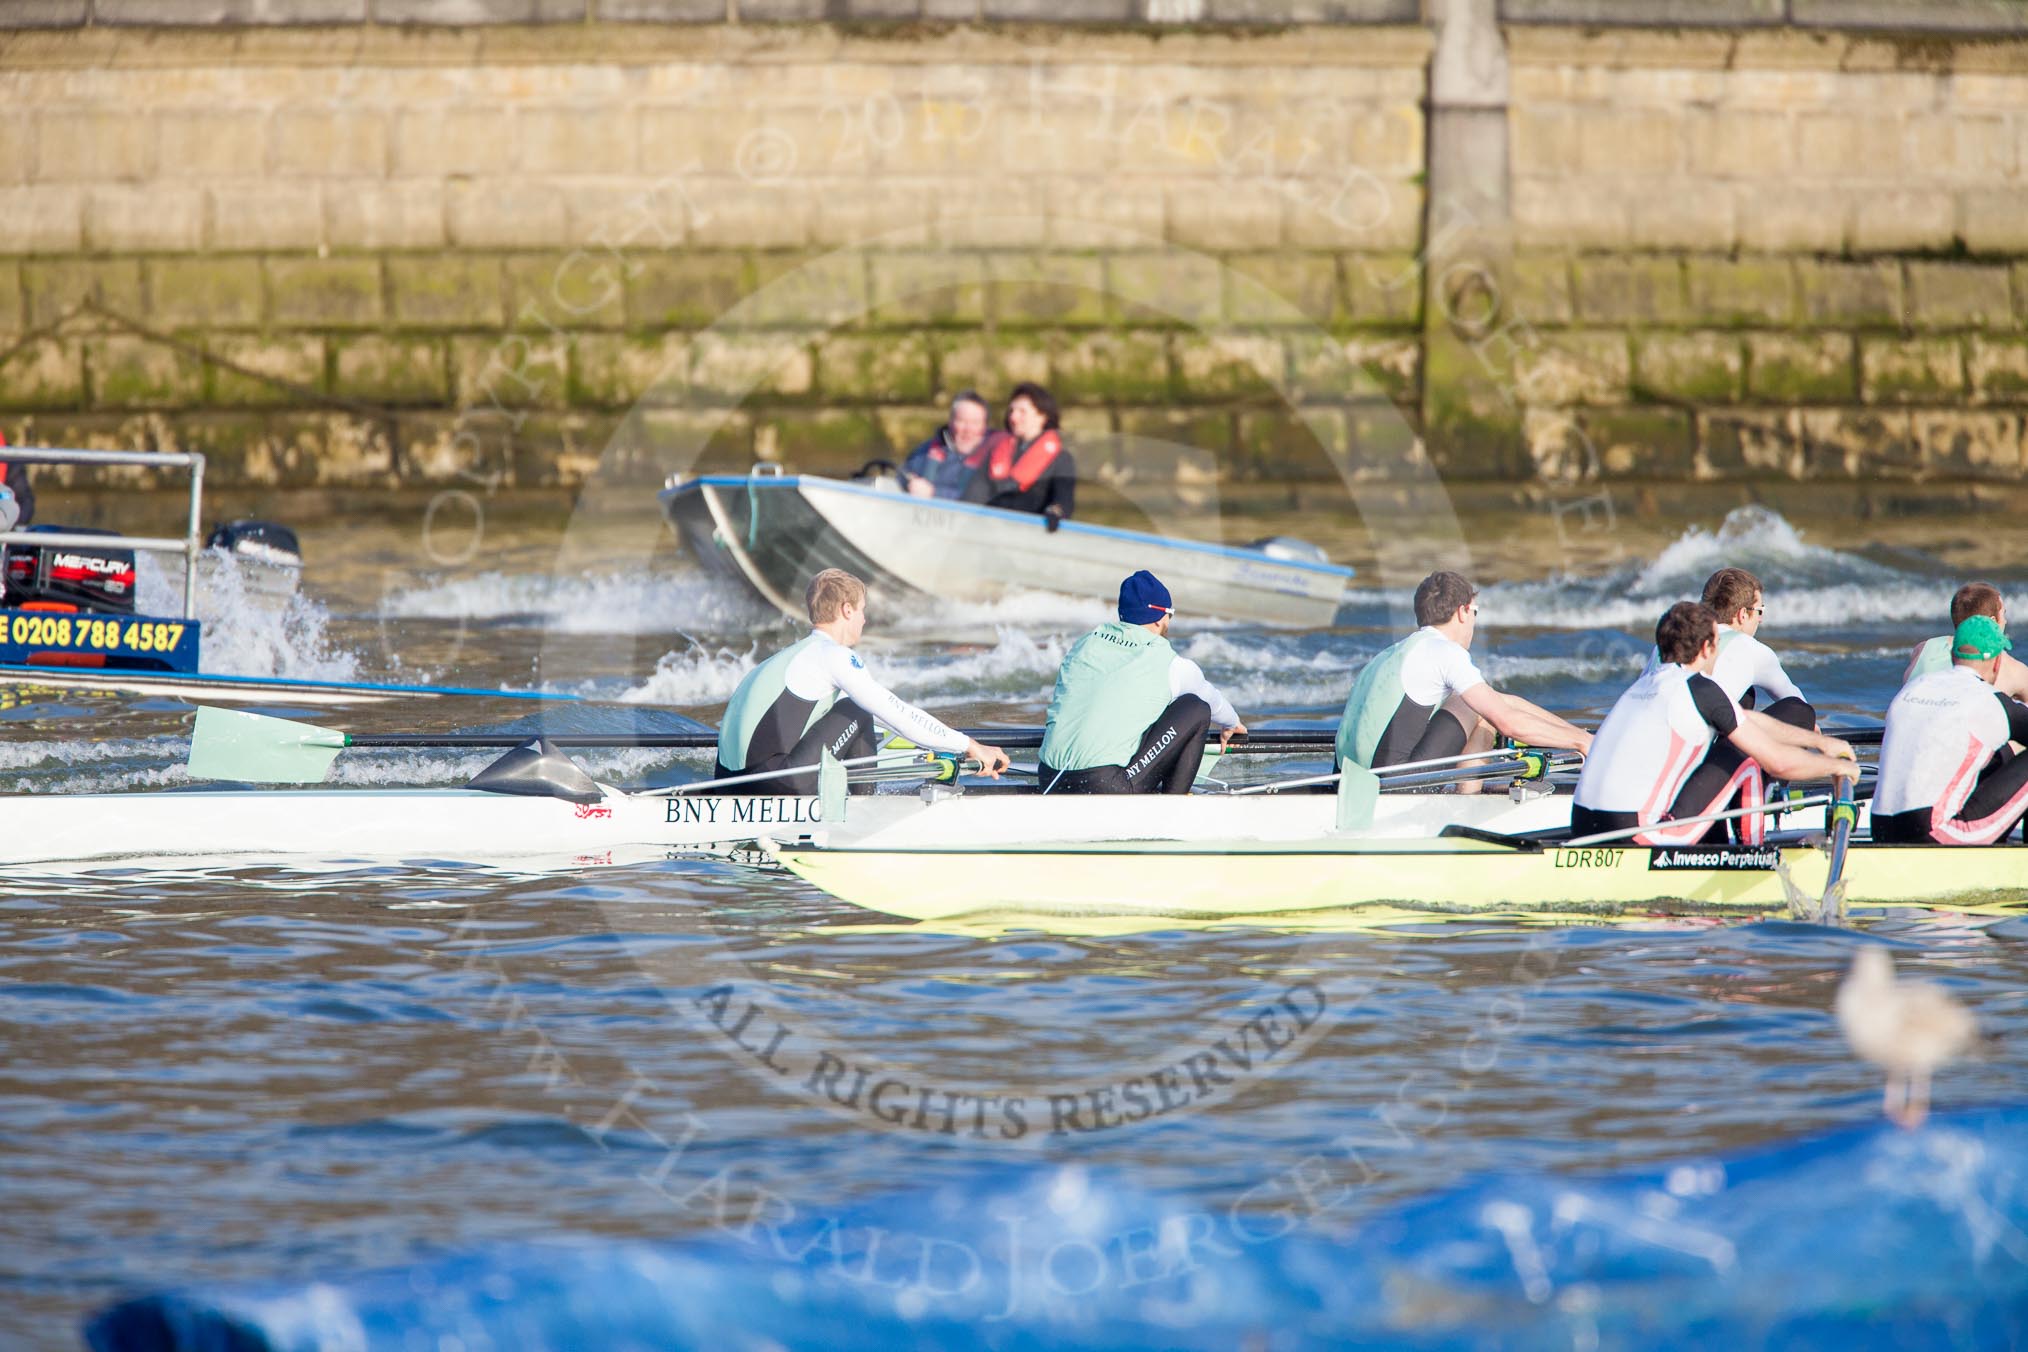 The Boat Race season 2013 - fixture CUBC vs Leander.
River Thames Tideway between Putney Bridge and Mortlake,
London SW15,

United Kingdom,
on 02 March 2013 at 15:57, image #112